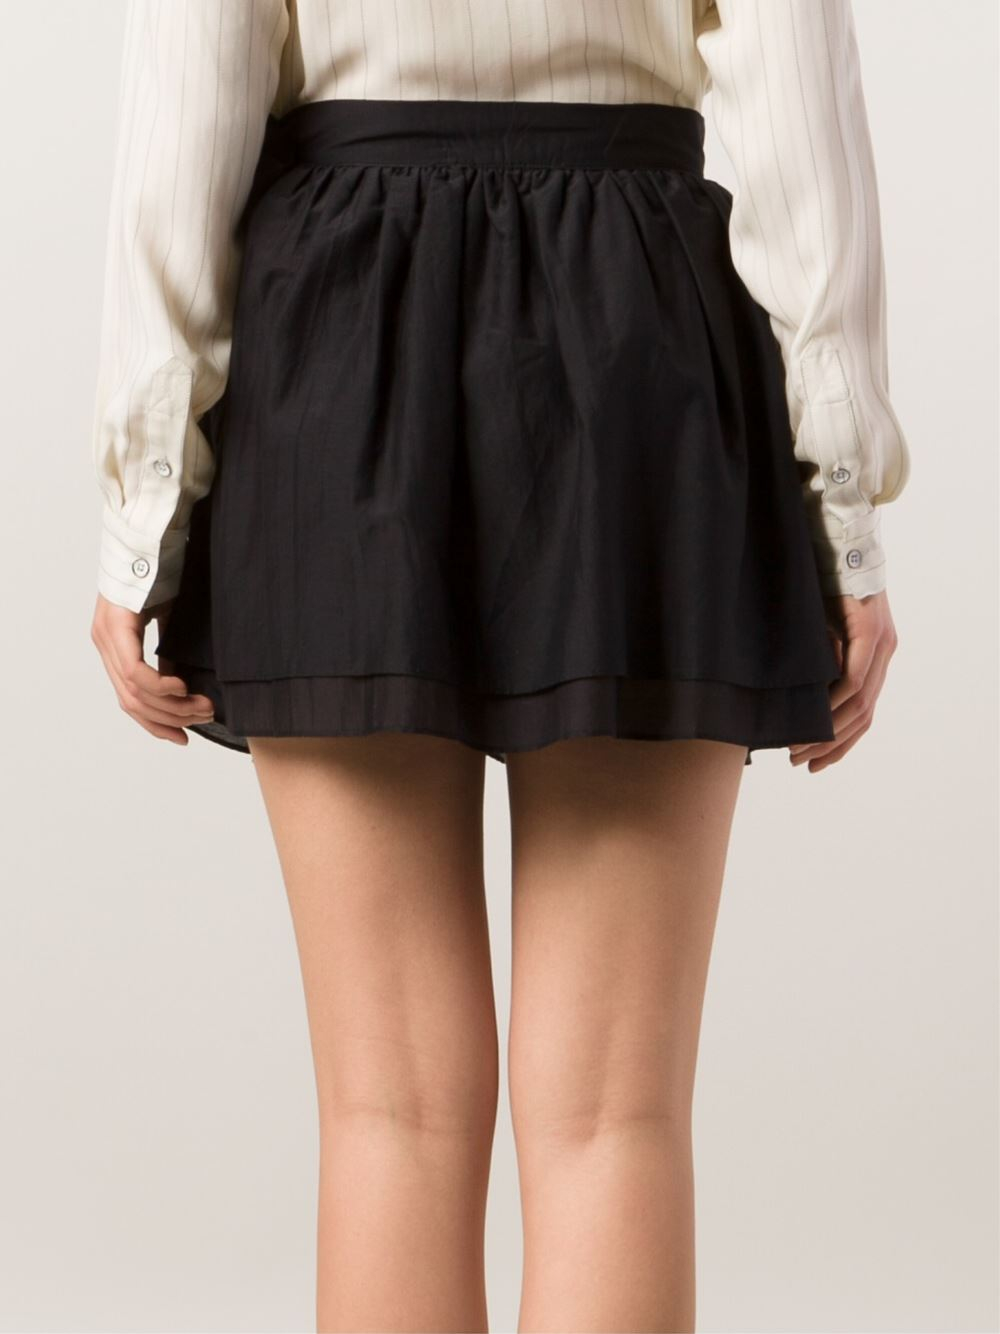 Sam & lavi Layered Mini Skirt in Black | Lyst